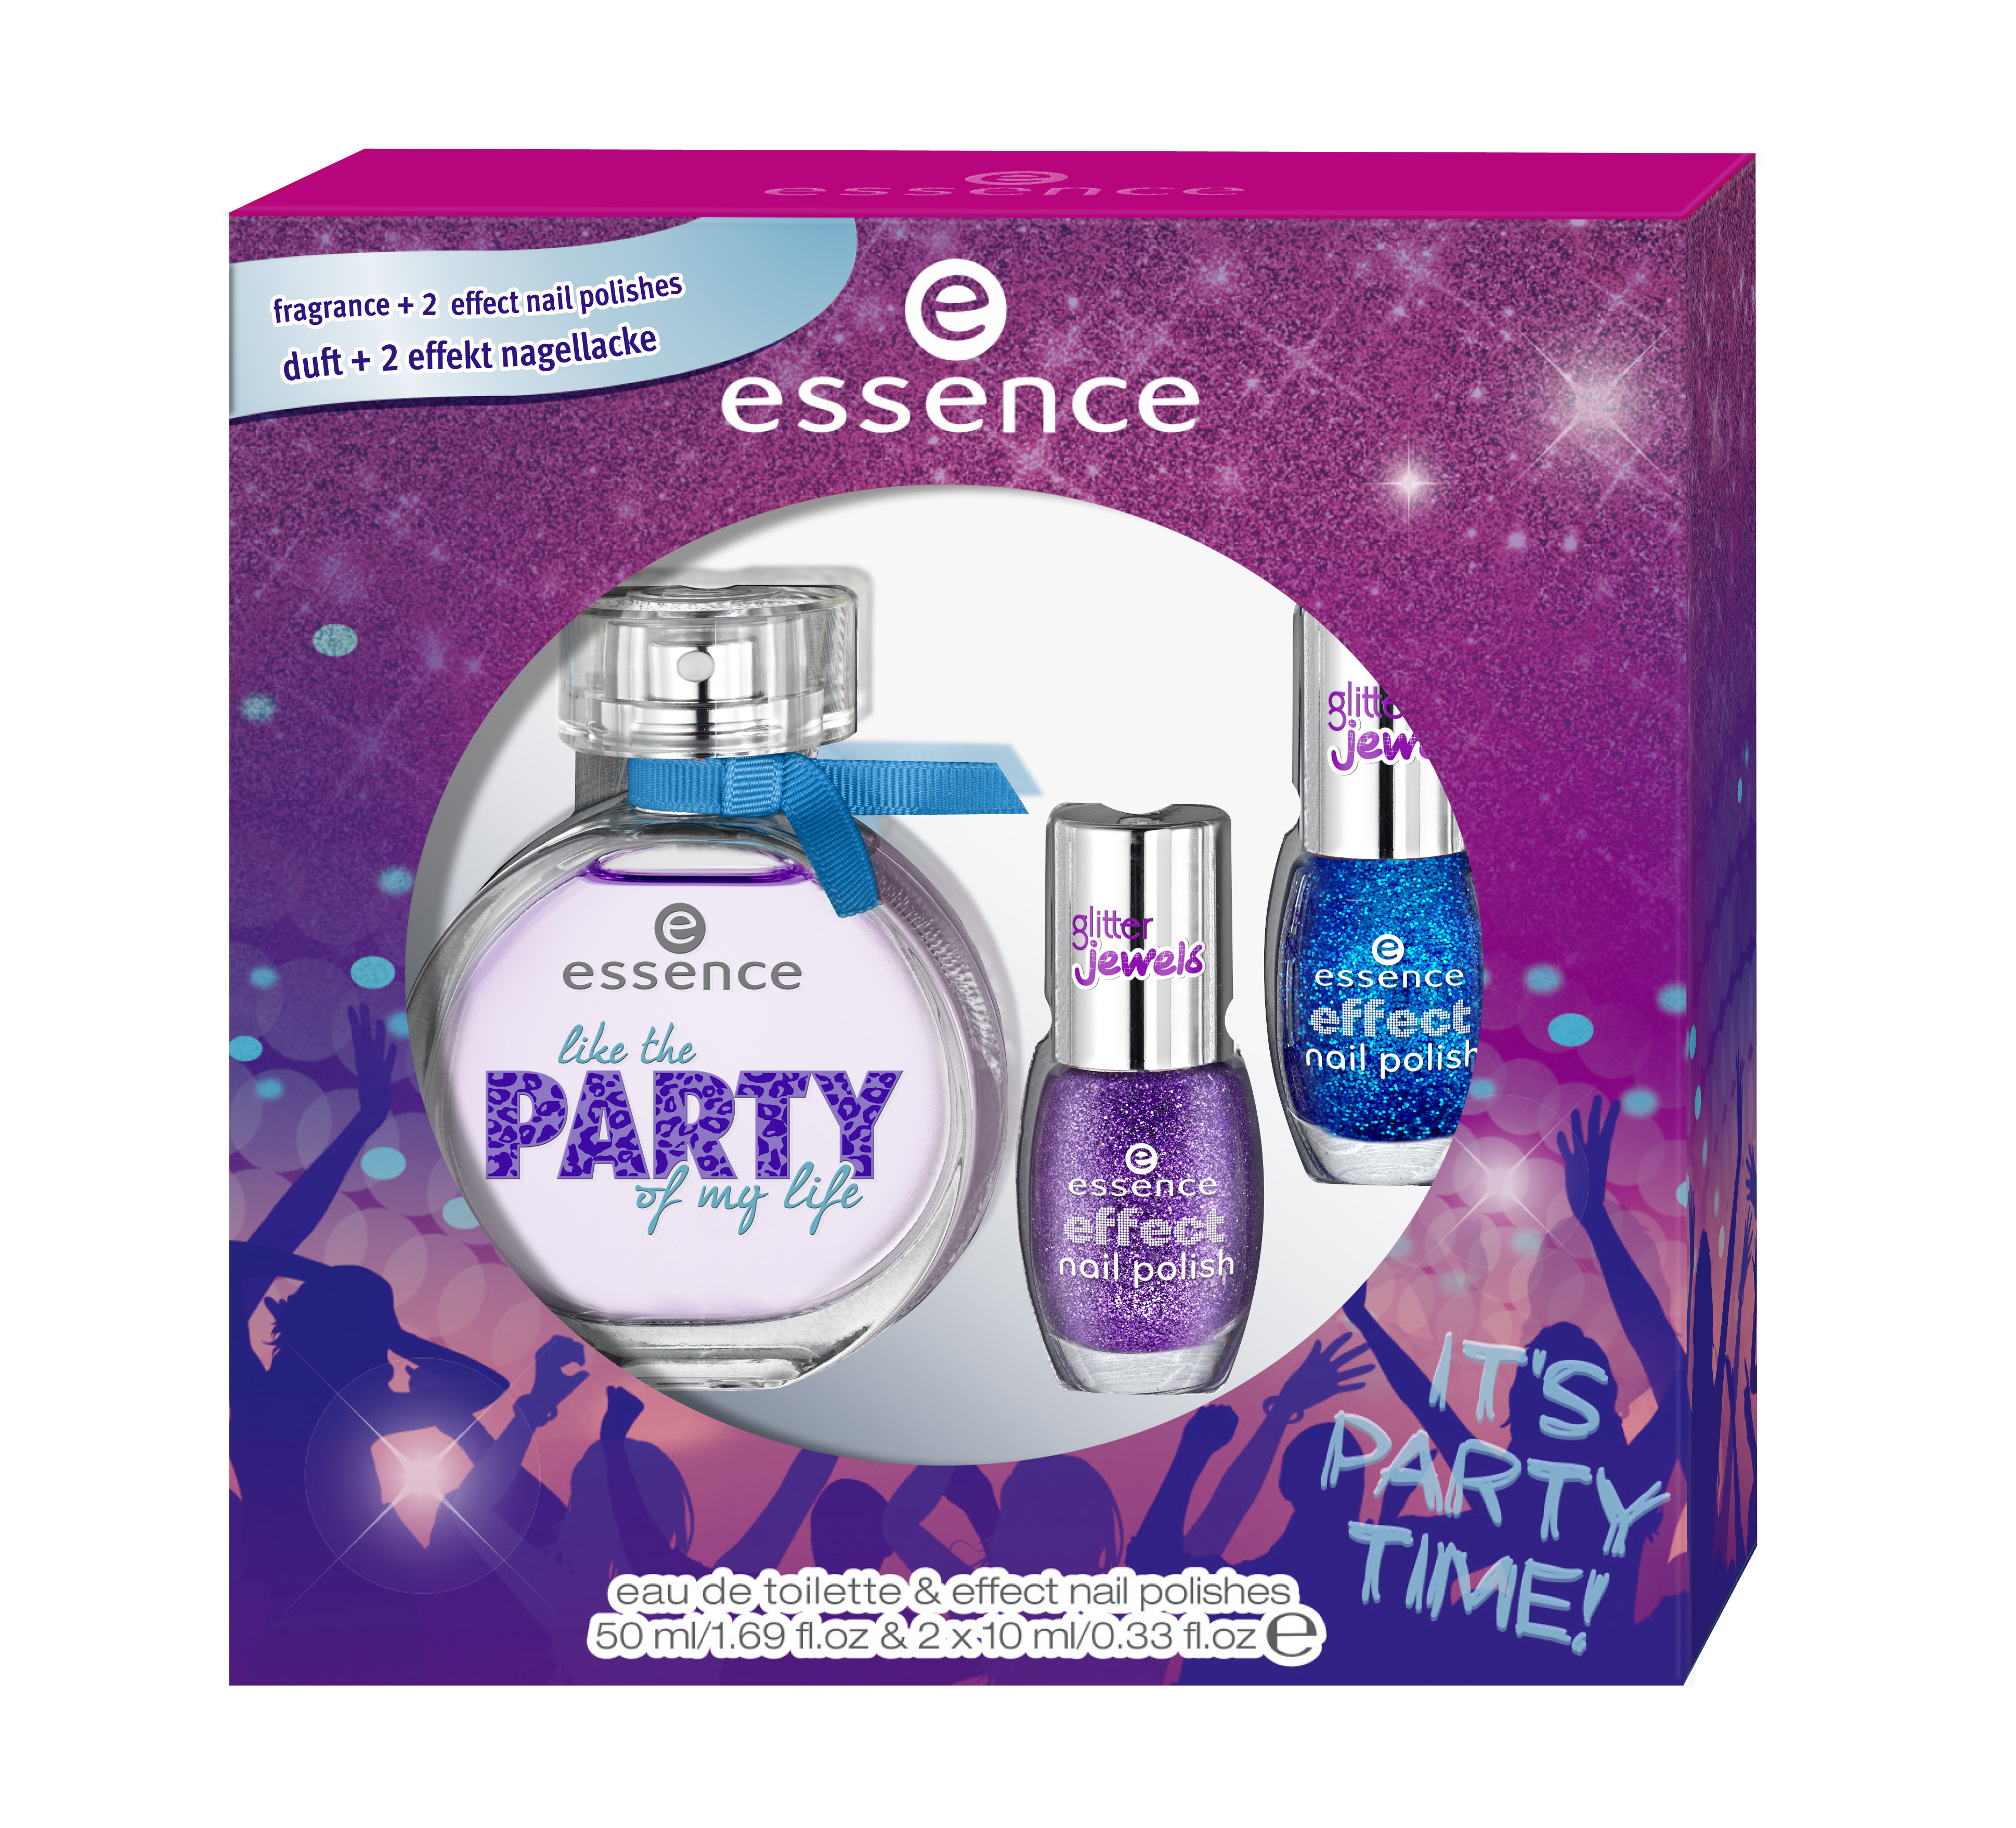 essence fragrance set 06 party xmas set